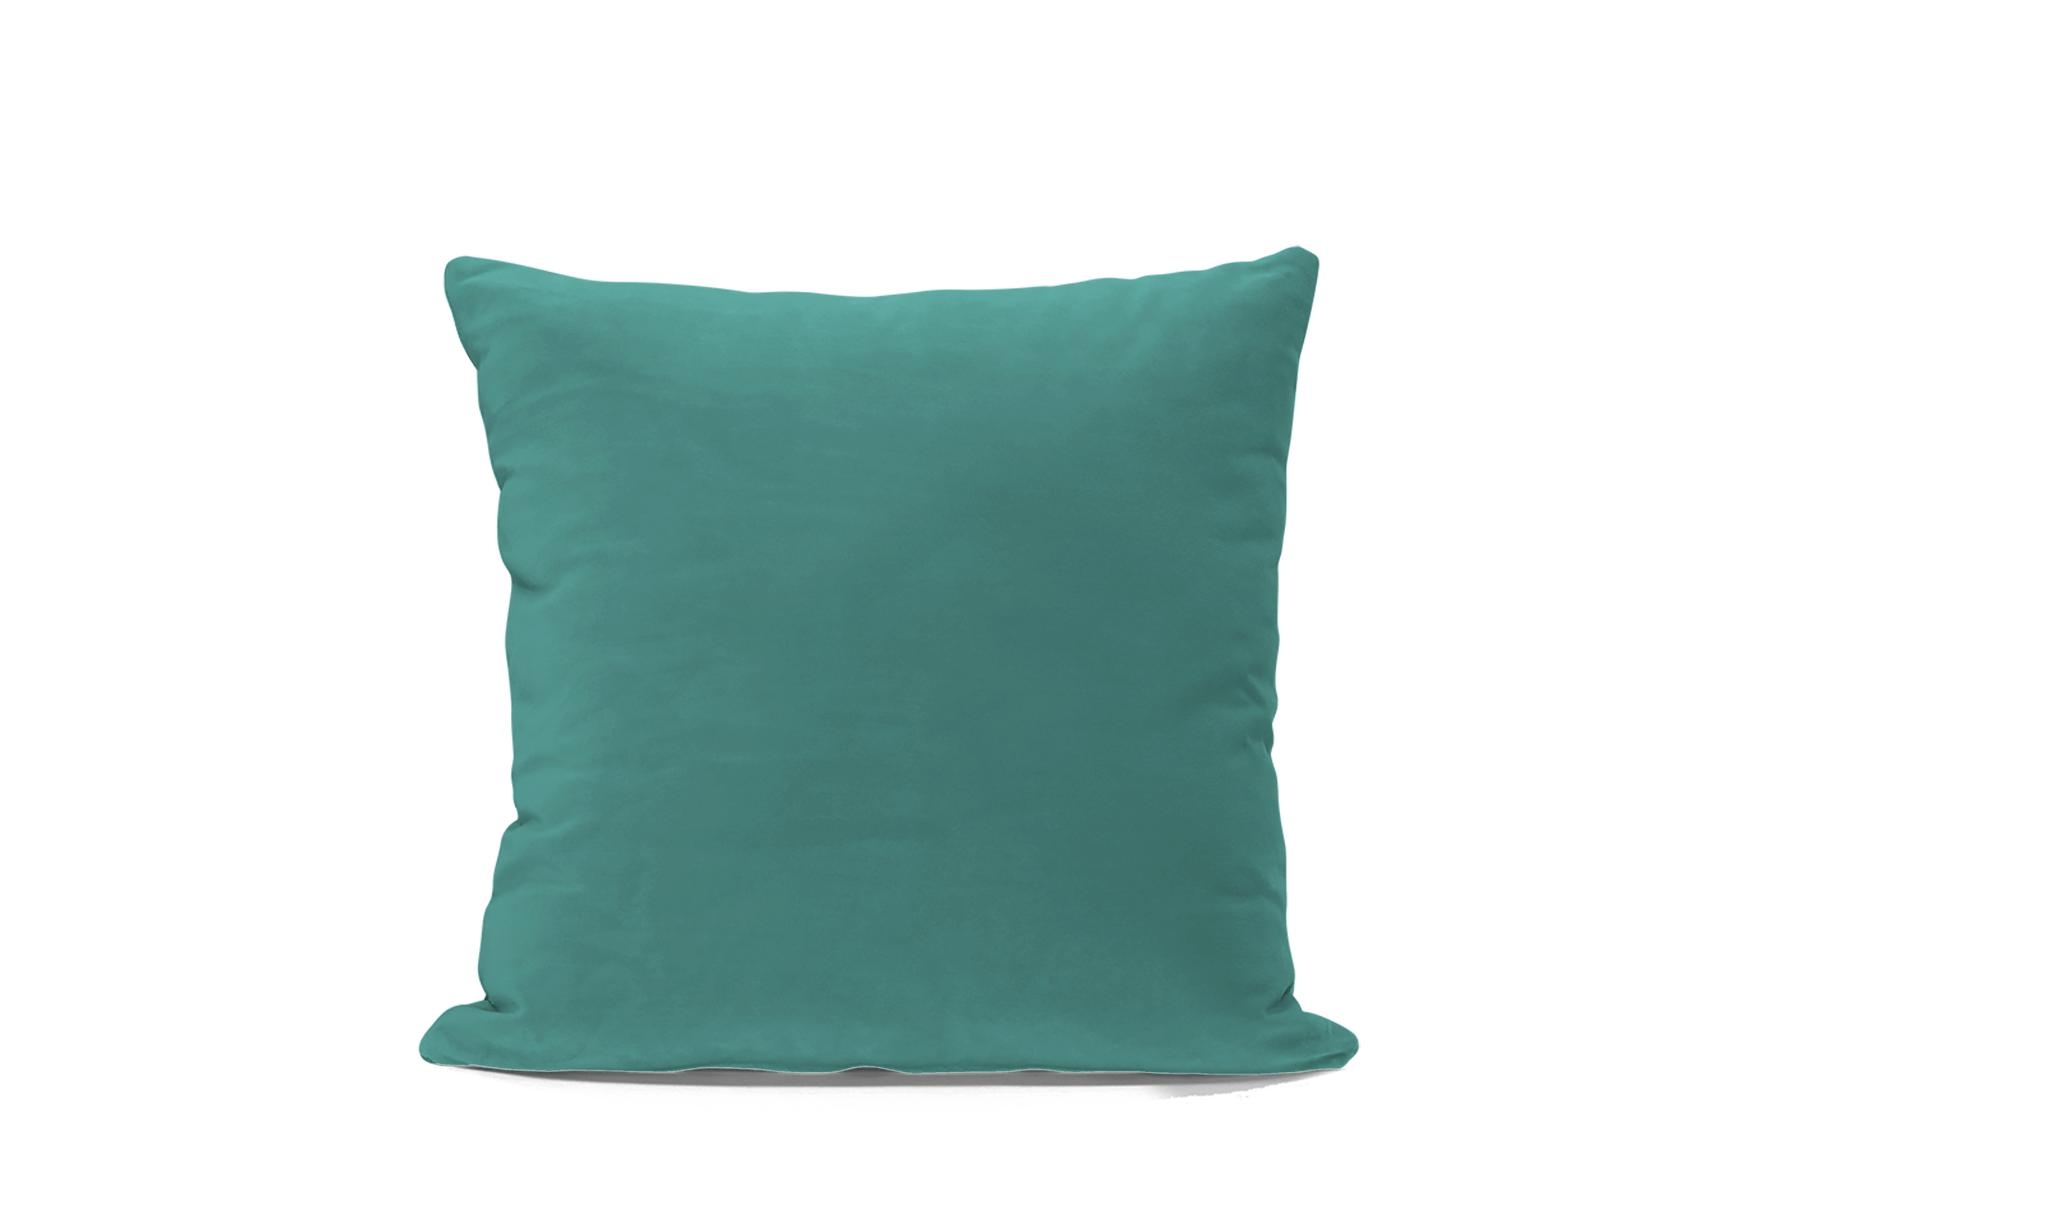 Green Minka Mid Century Modern Square Pillow - Essence Aqua - Image 0